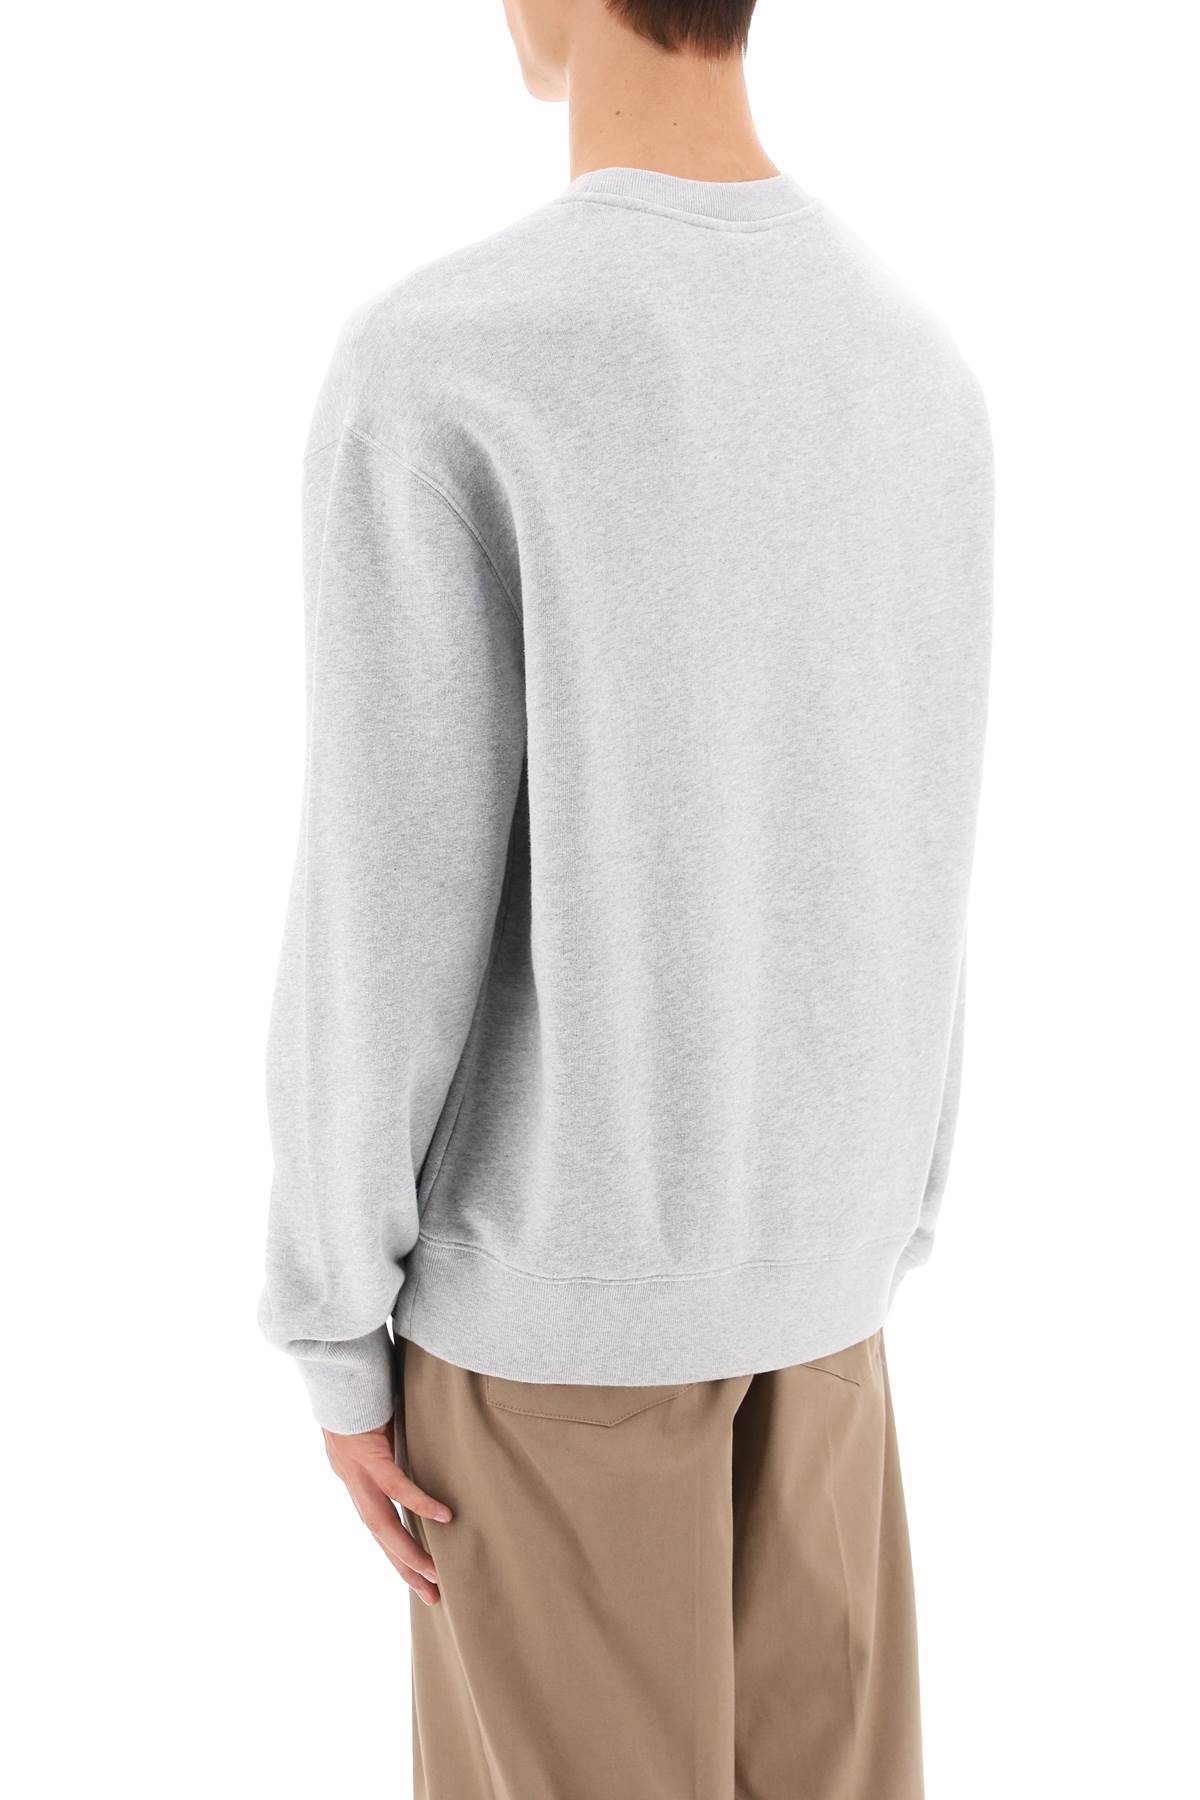 Shop Maison Kitsuné College Fox Print Sweatshirt In Grey